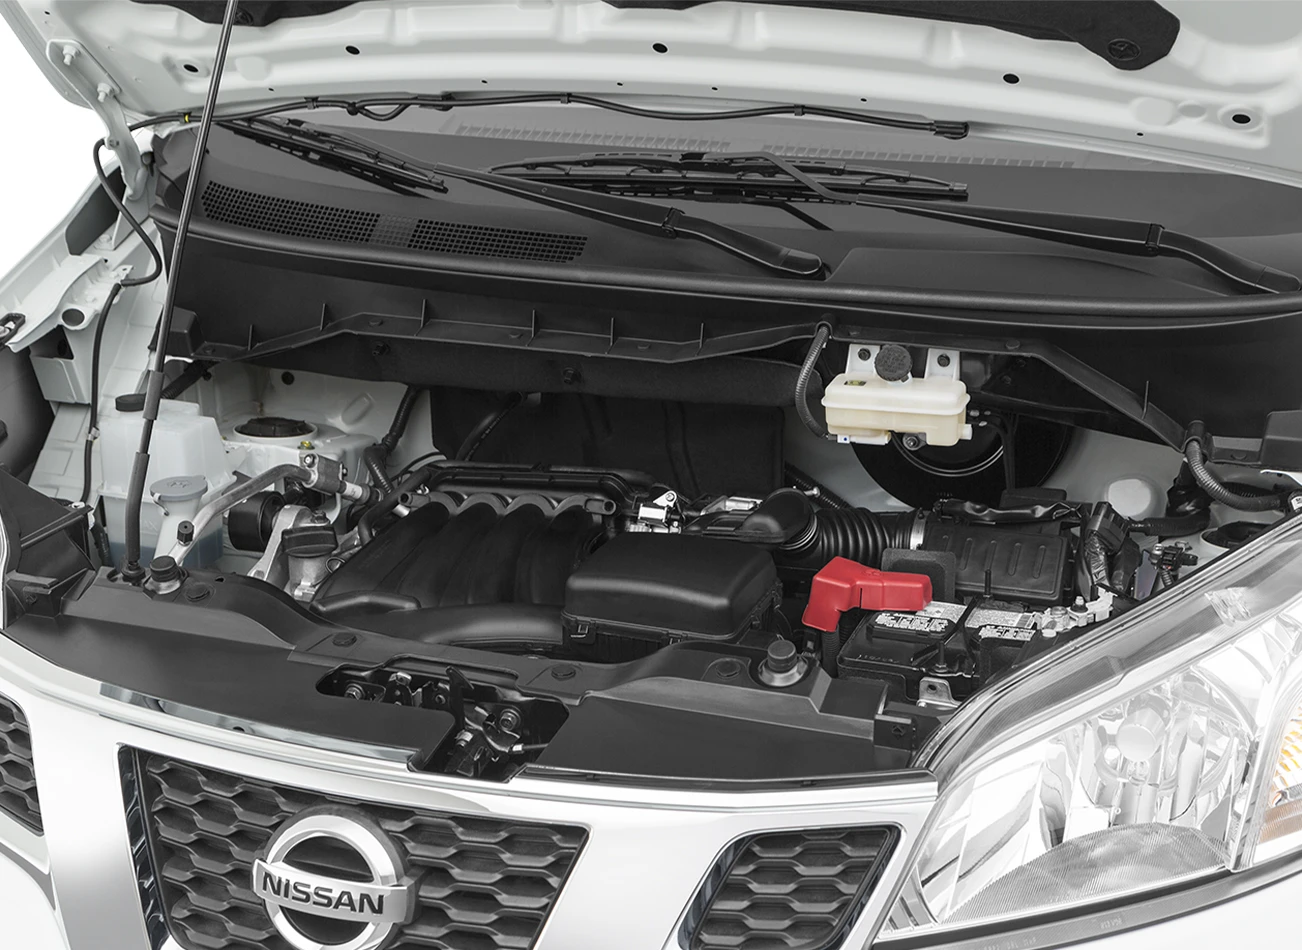 2020 Nissan NV200 Review: Engine | CarMax